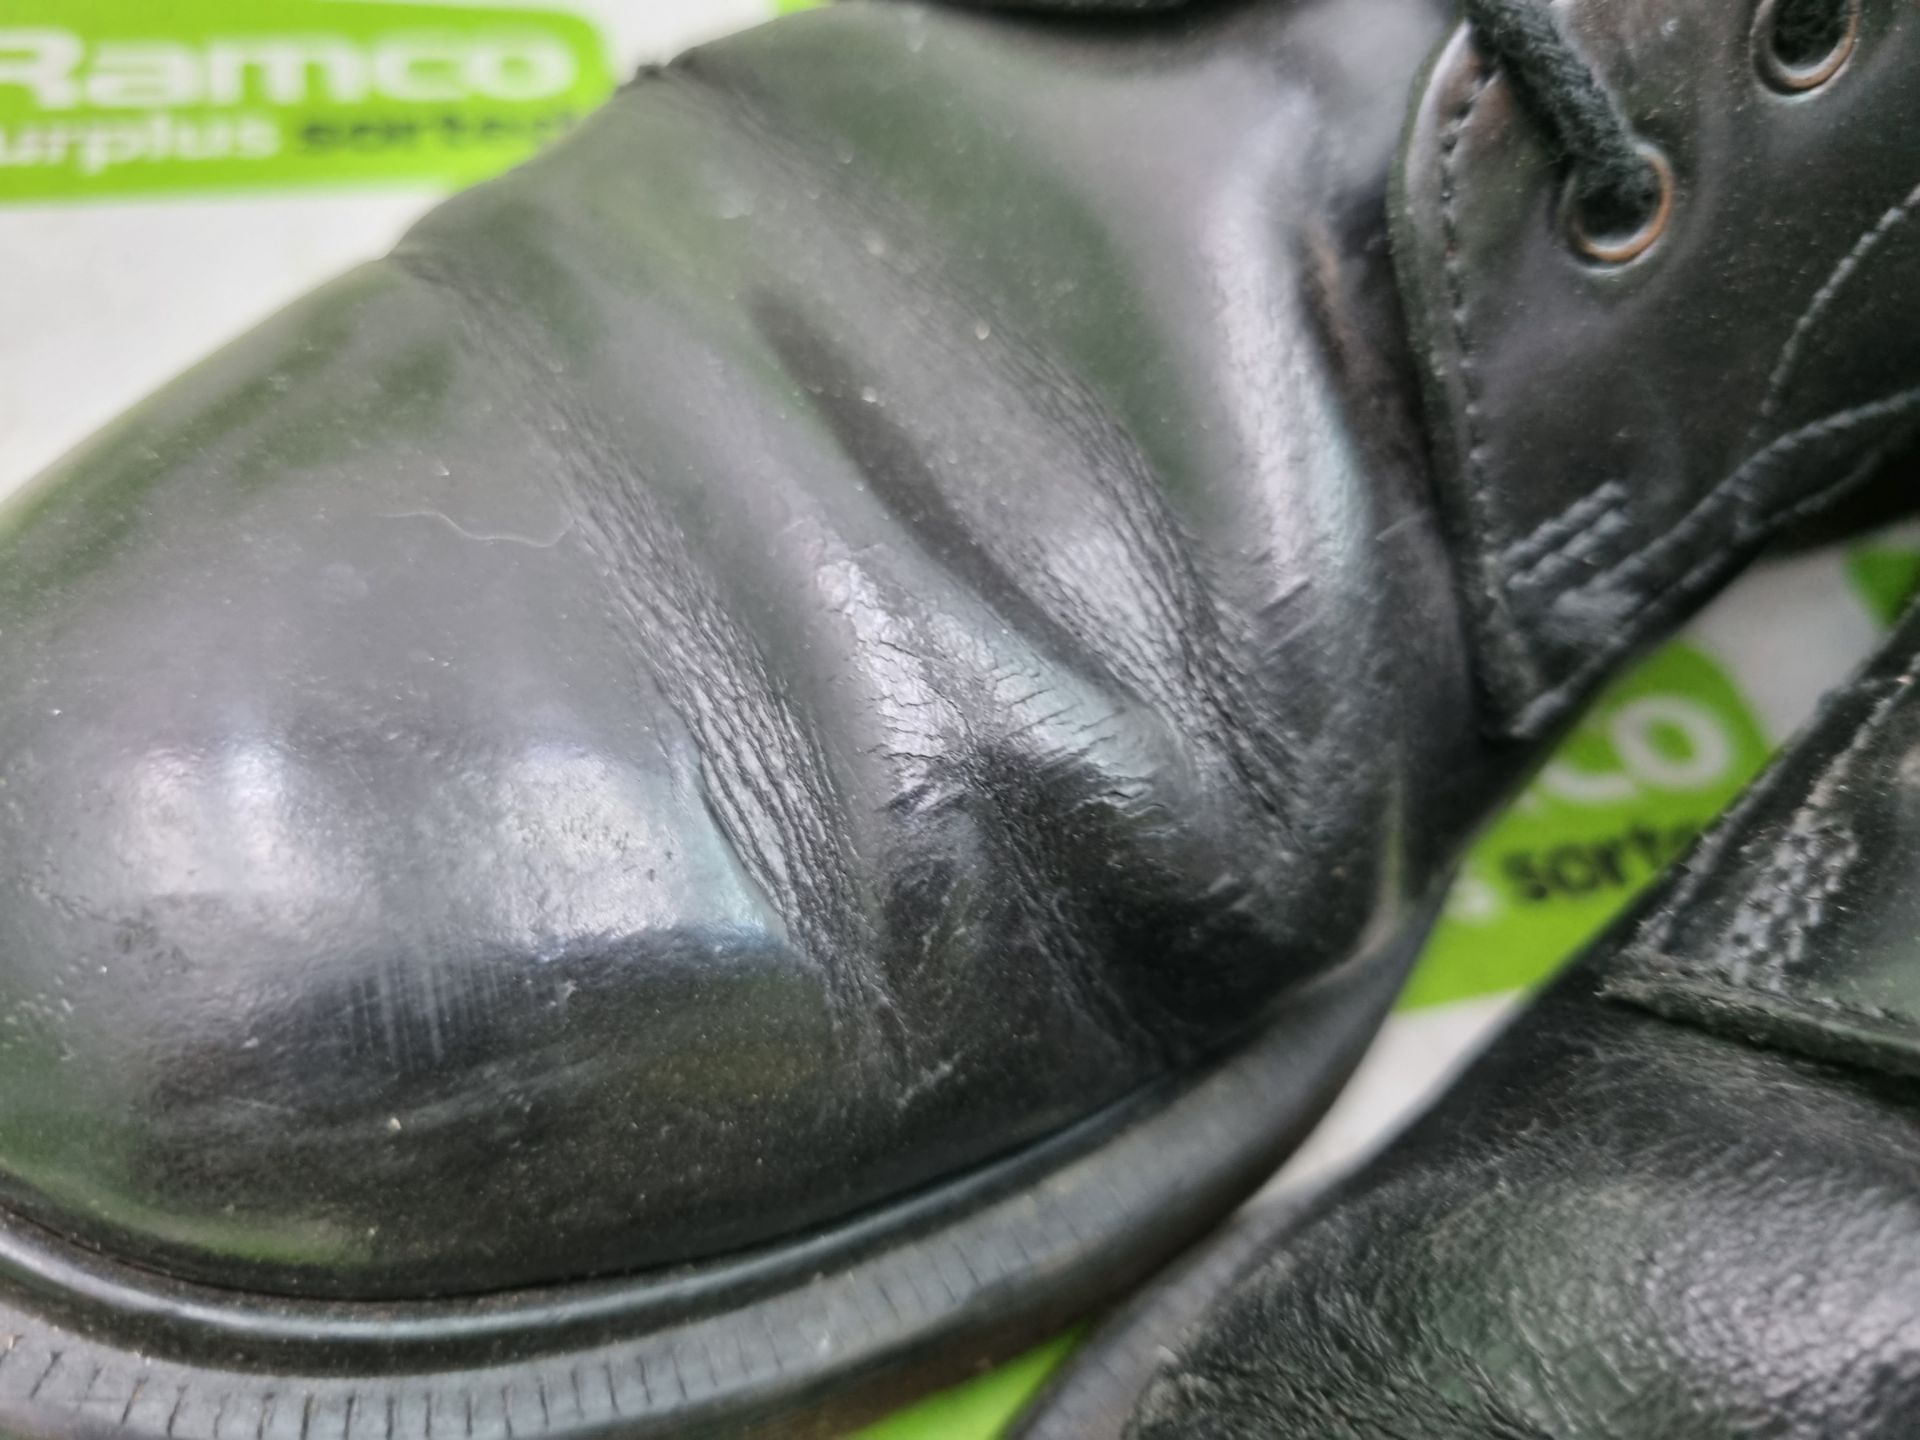 Solovair Black Leather Shoes 'Postman Style' Pair - Size EU 42.5, UK 8.5 - 30x25x15cm - Image 4 of 4